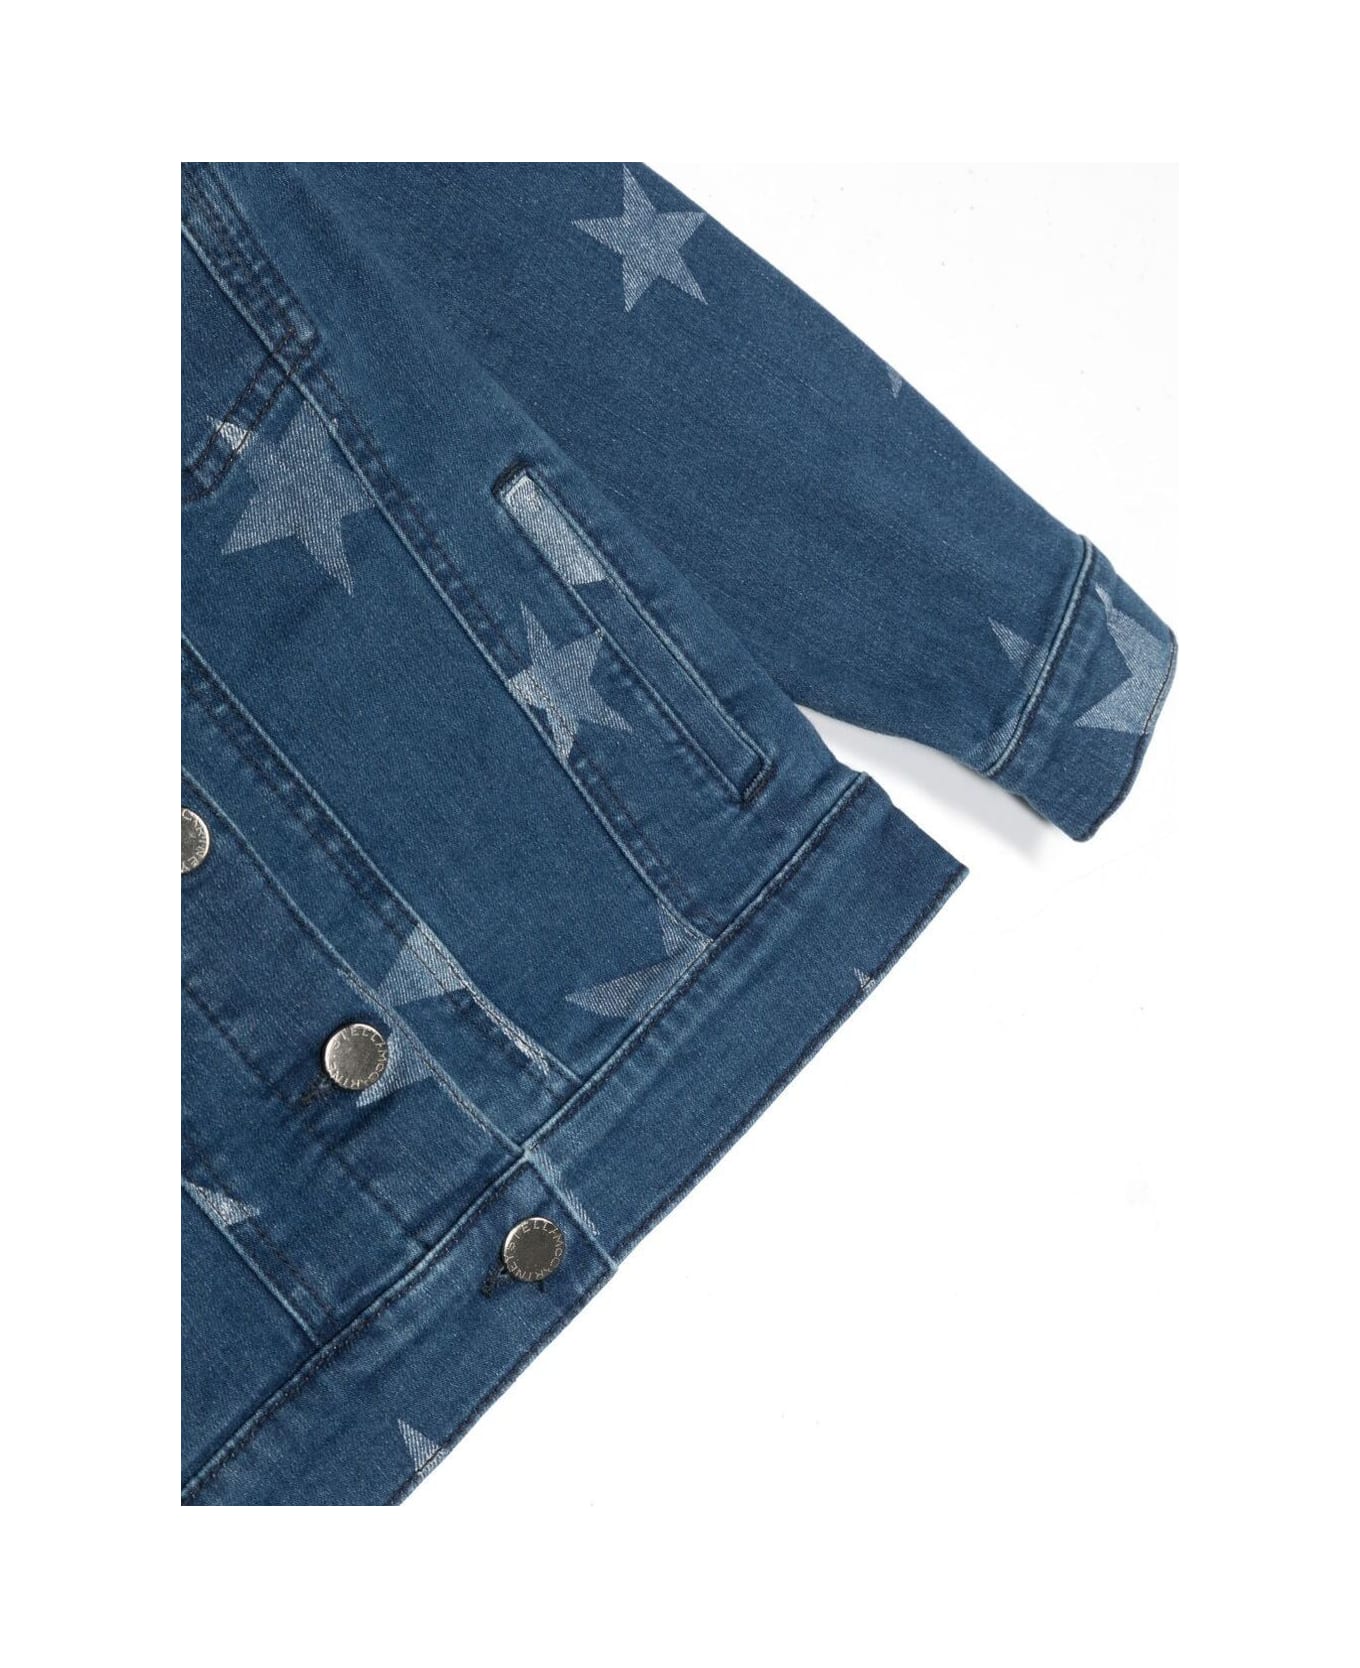 Stella McCartney Jeans Jacket With Star Print In Stretch Cotton Girl - Blu Denim